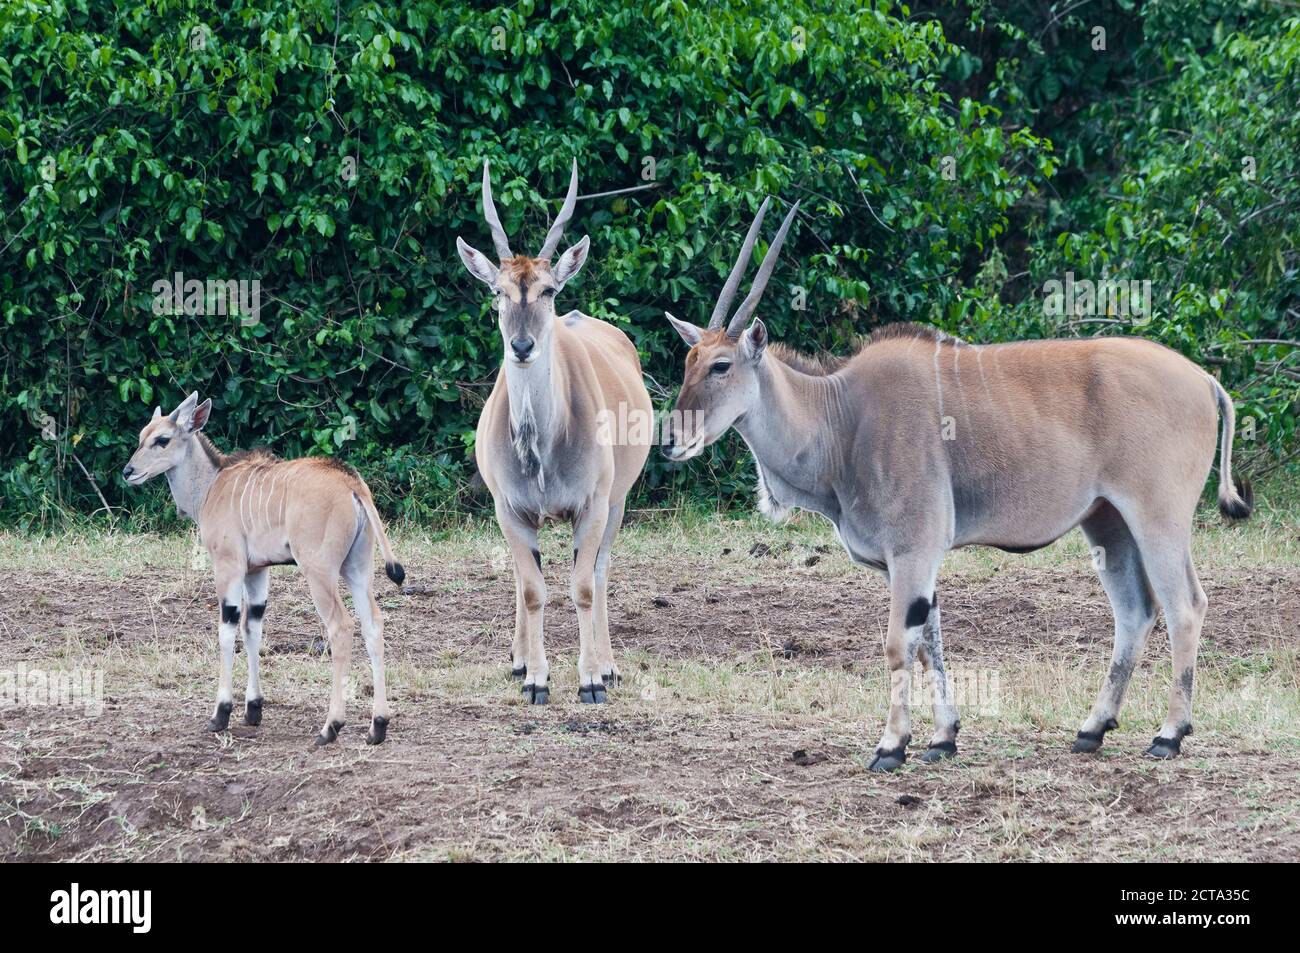 Africa, Kenya, Maasai Mara National Reserve, Group of Common Elands or Eland Antelopes (Taurotragus oryx) Stock Photo